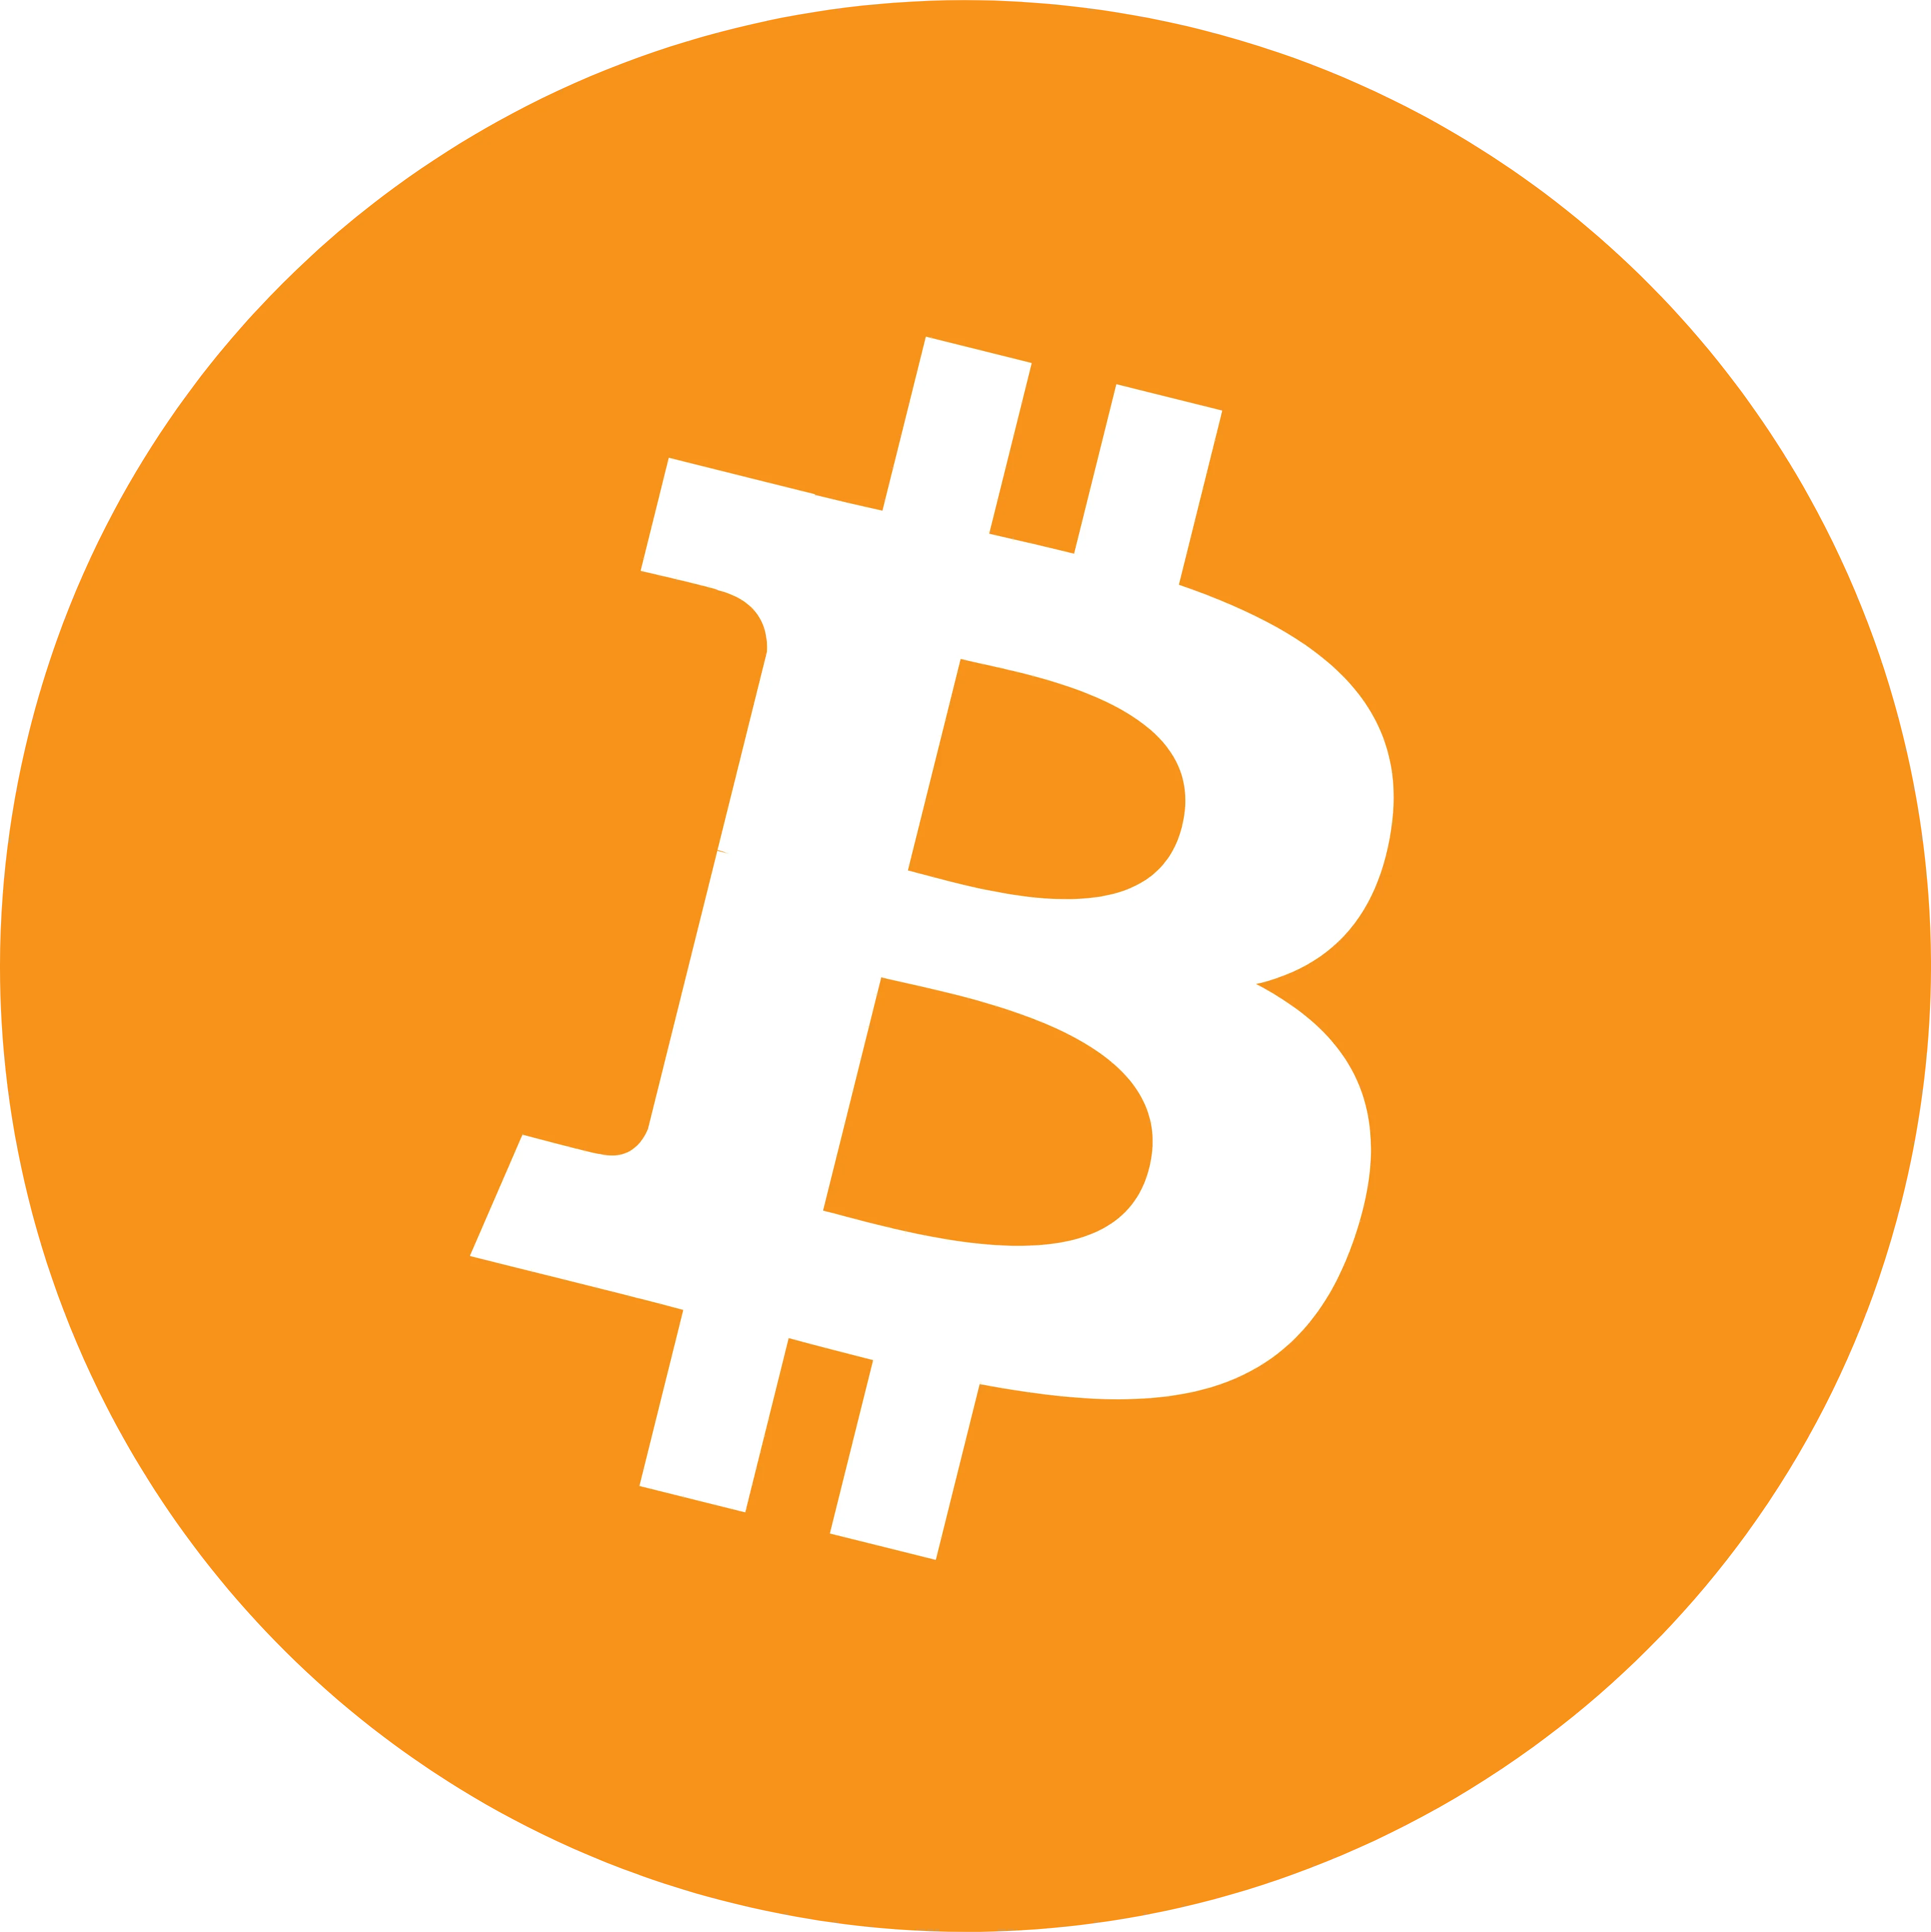 Bitcoin logo in svg format